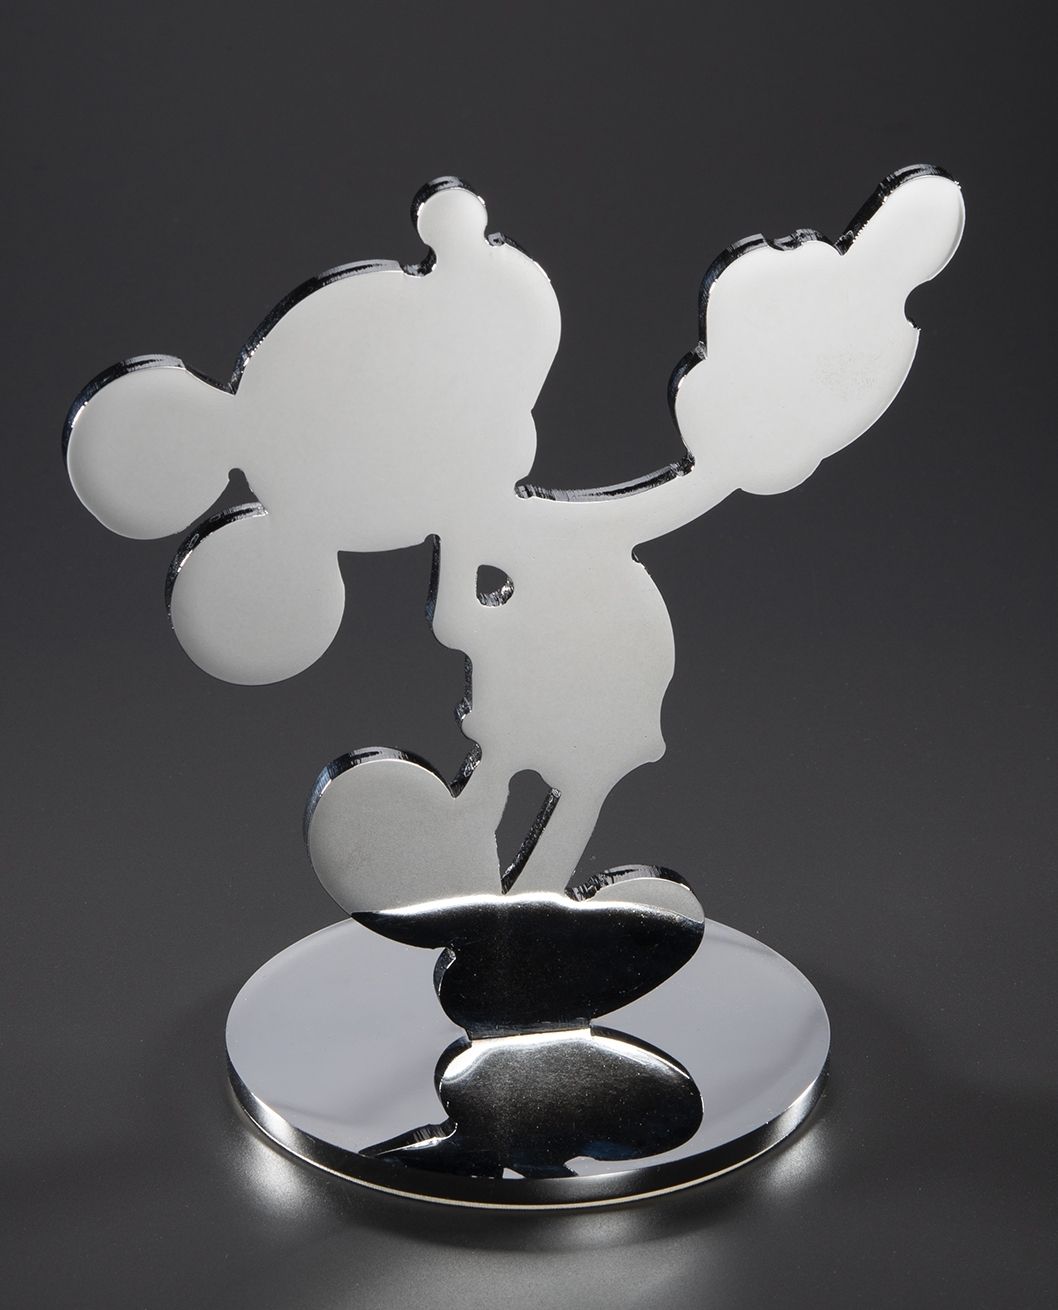 Thierry Corpet Thierry CORPET by Poulpik Studio

Mouse Finger Chrome

Sculpture &hellip;